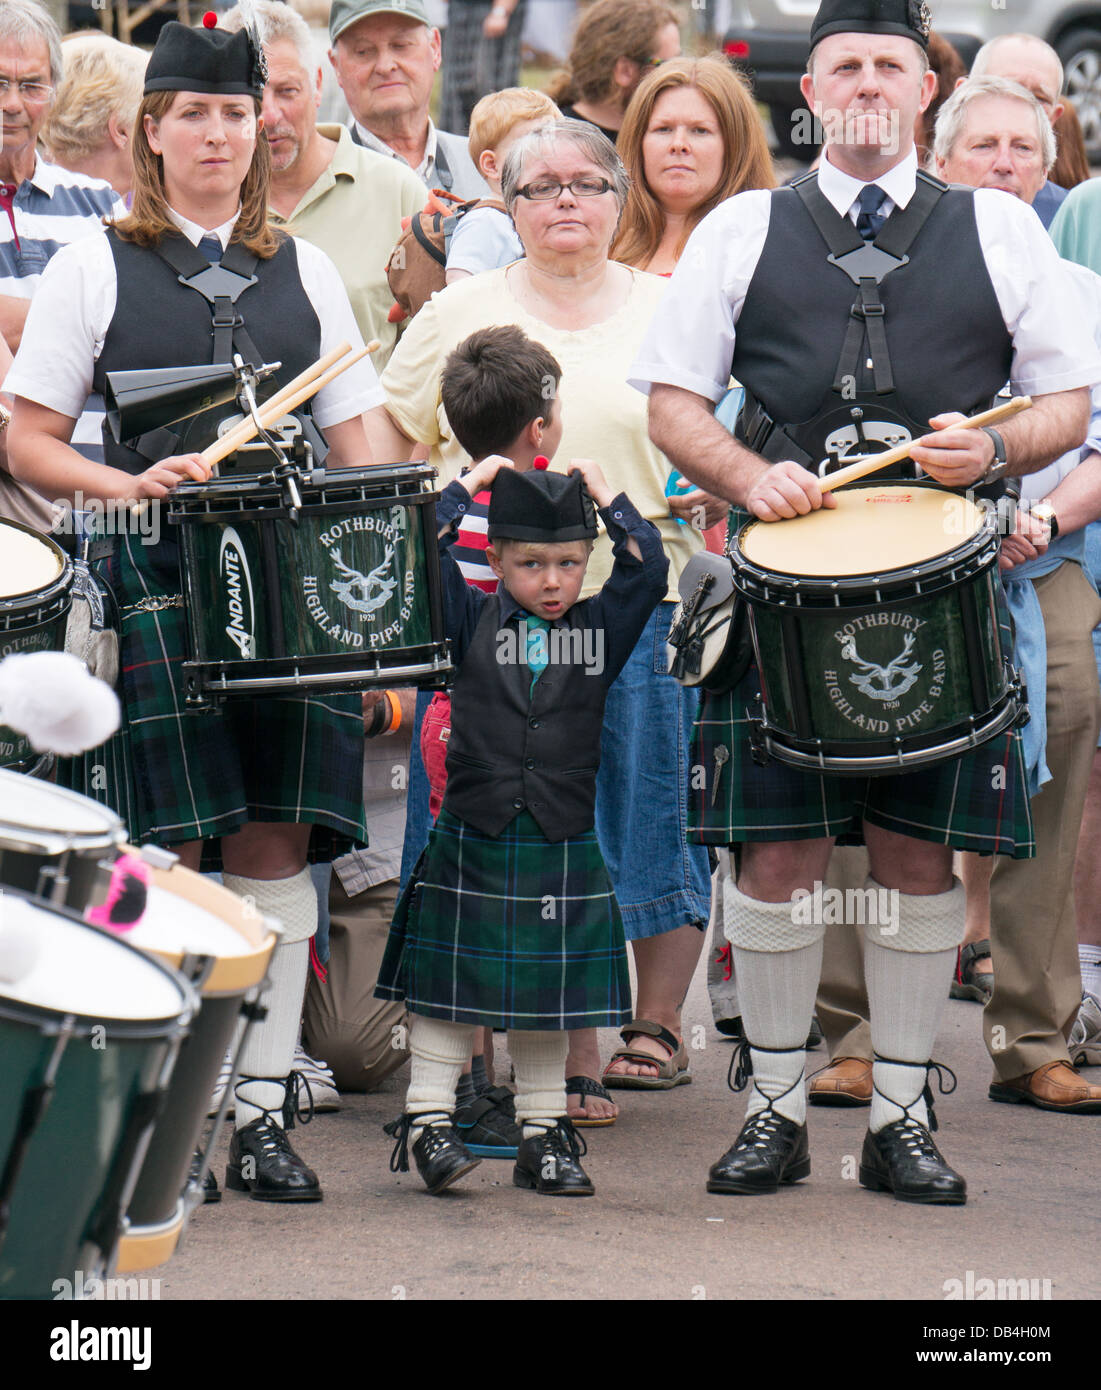 Familienangehörige von Rothbury Highland Pipe Band, Rothbury traditionelle Musikfestival, Nord-England, UK Stockfoto